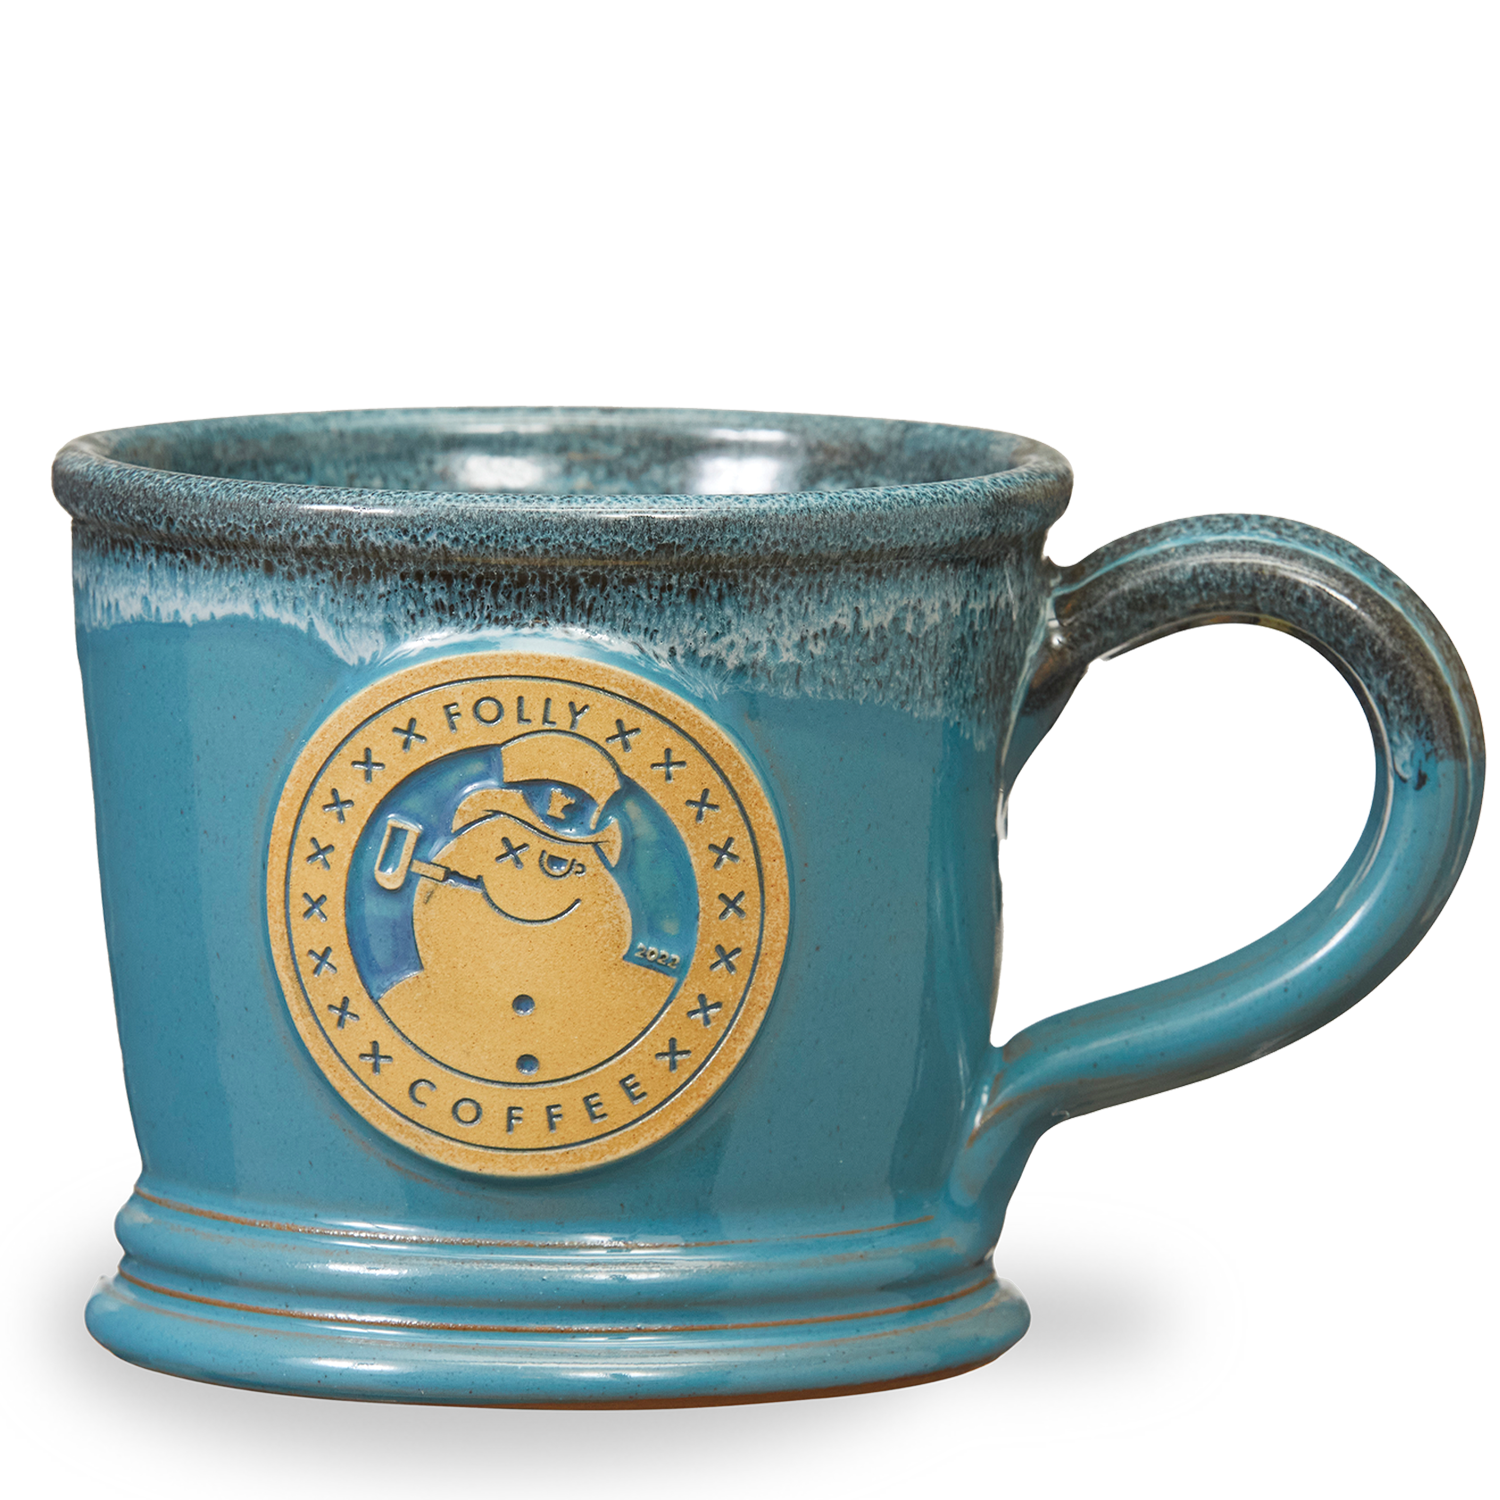 Folly Coffee <a class='qbutton' href='https://deneenpottery.com/mug-styles/shave-mug/'>View More Details</a>